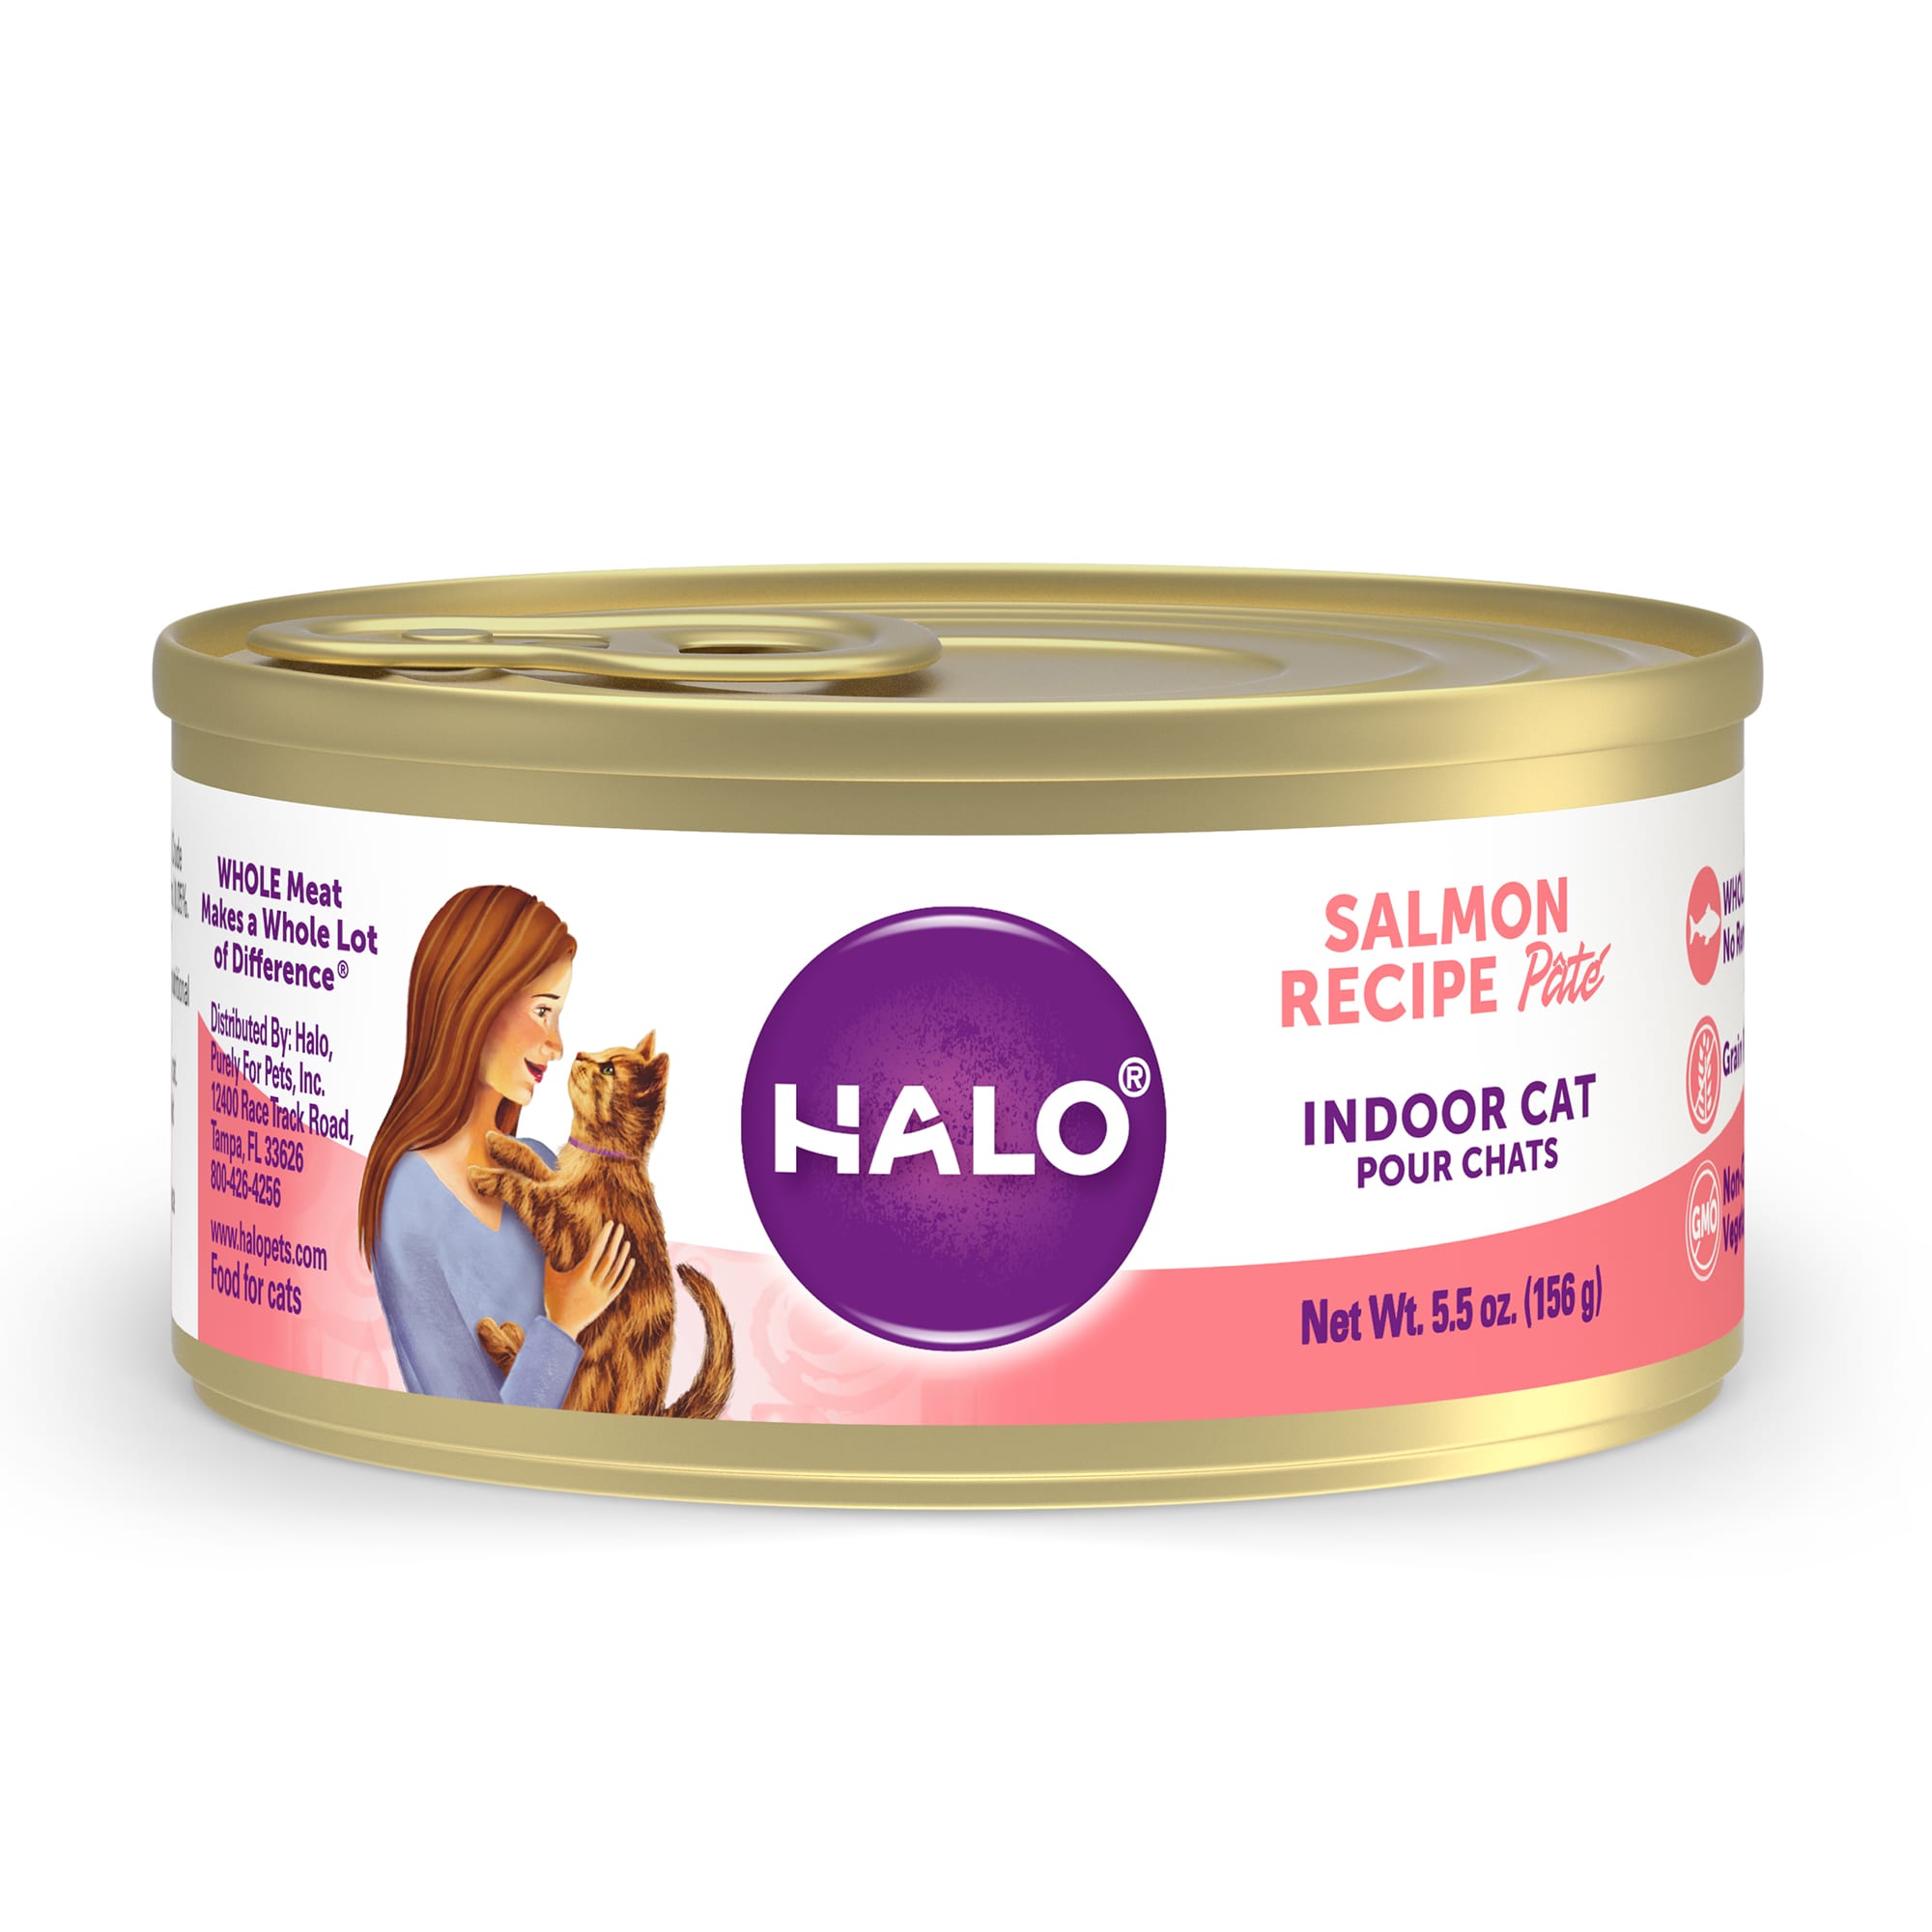 Halo Indoor Grain Free Salmon Recipe Pate Canned Cat Food, 5.5 oz